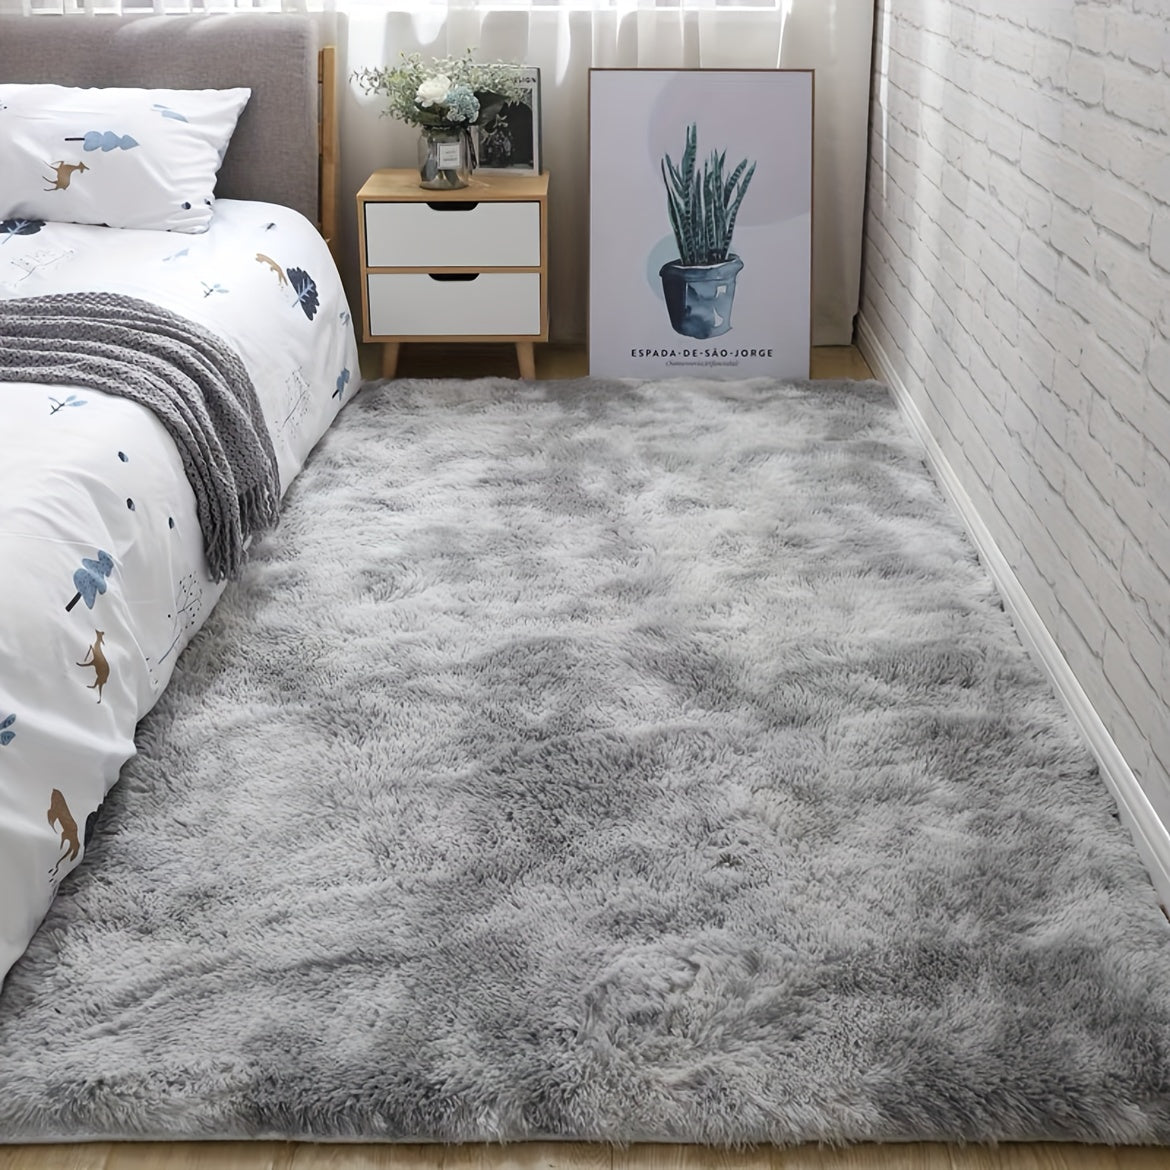 Soft Plush Shag Rug for Bedroom & Living Room - Non-Slip, Tie-Dyed Design - 31.5*62.99inch